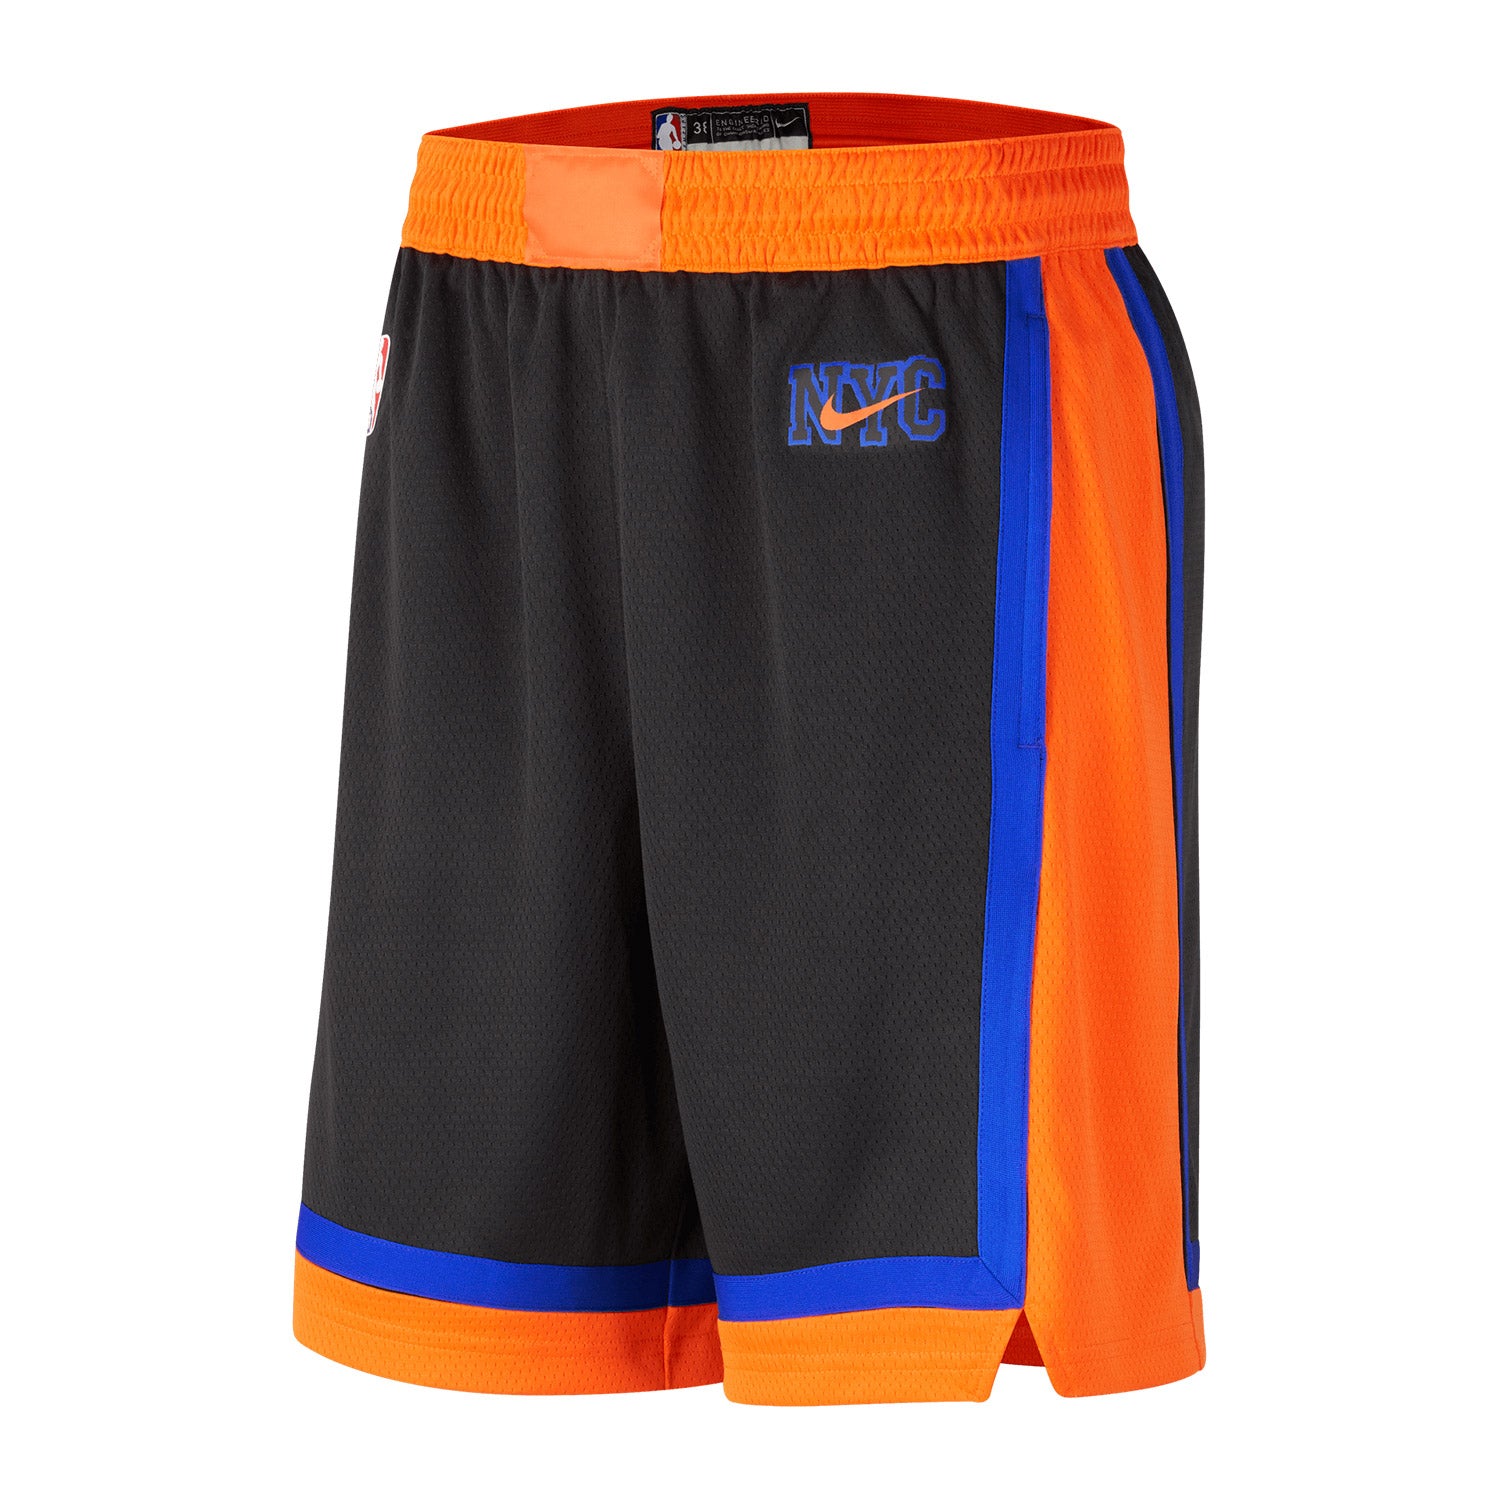 Nike Knicks City Edition 22-23 Dri-fit Swingman Shorts In Black, Orange & Blue - Front View